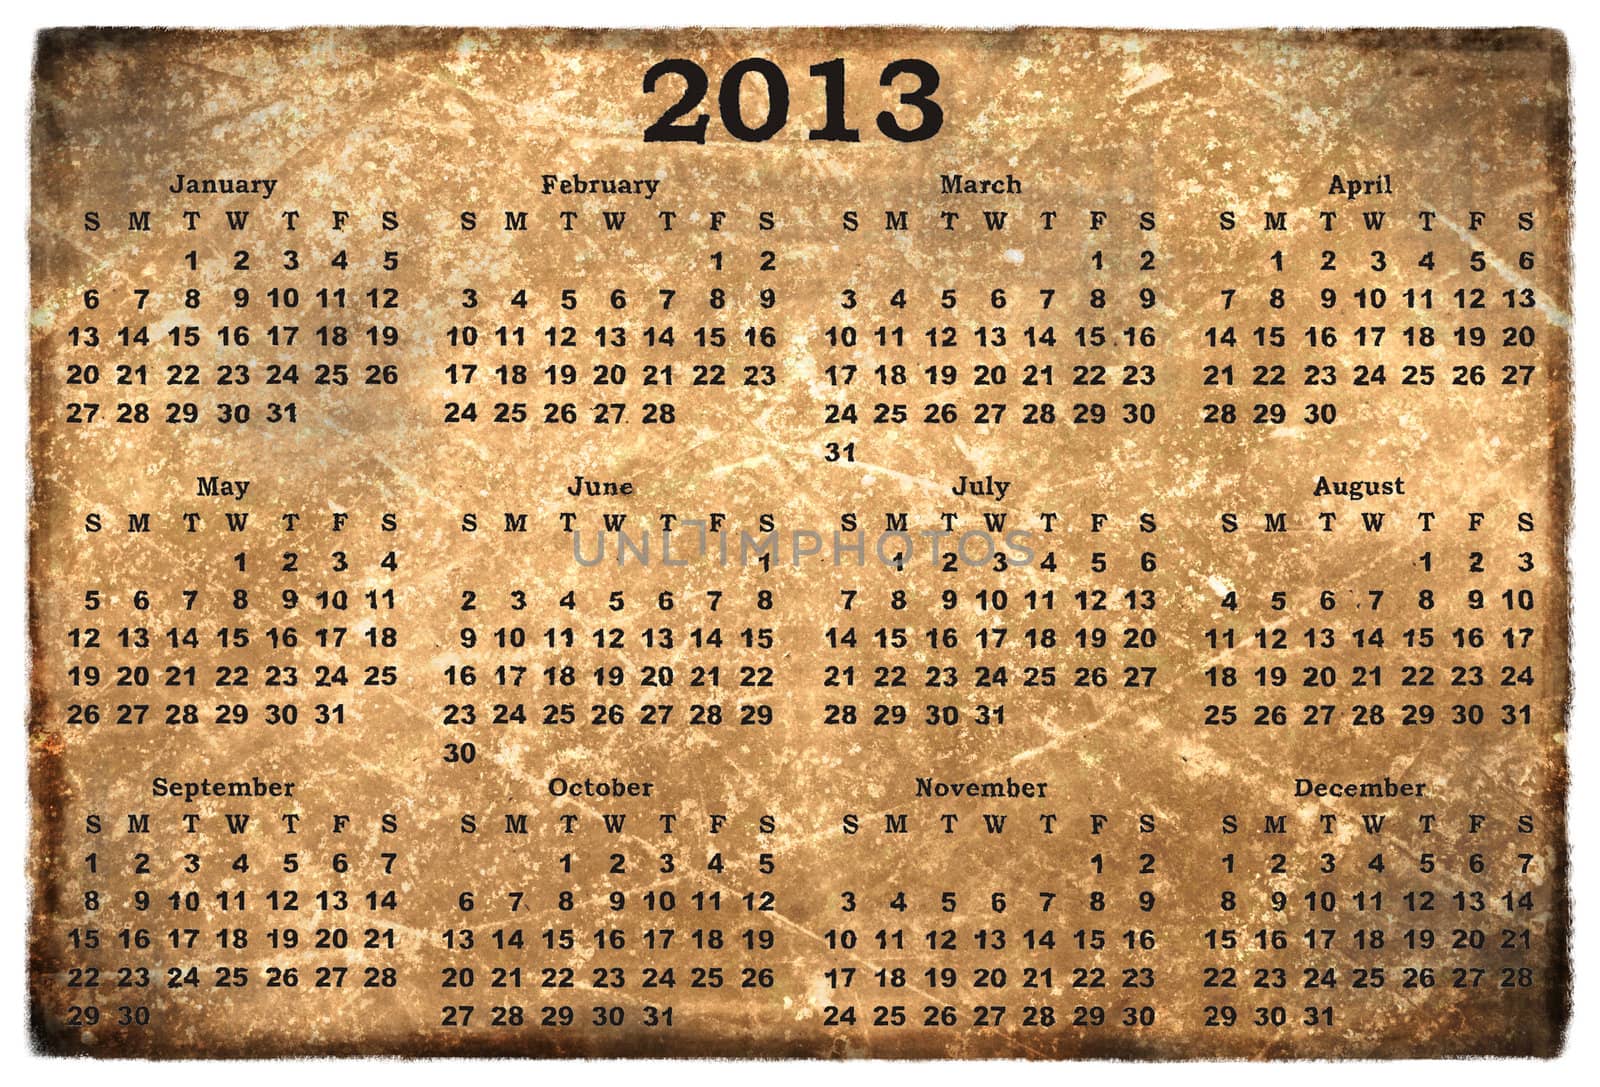  monthly calendar 2013  on  old grunge background  